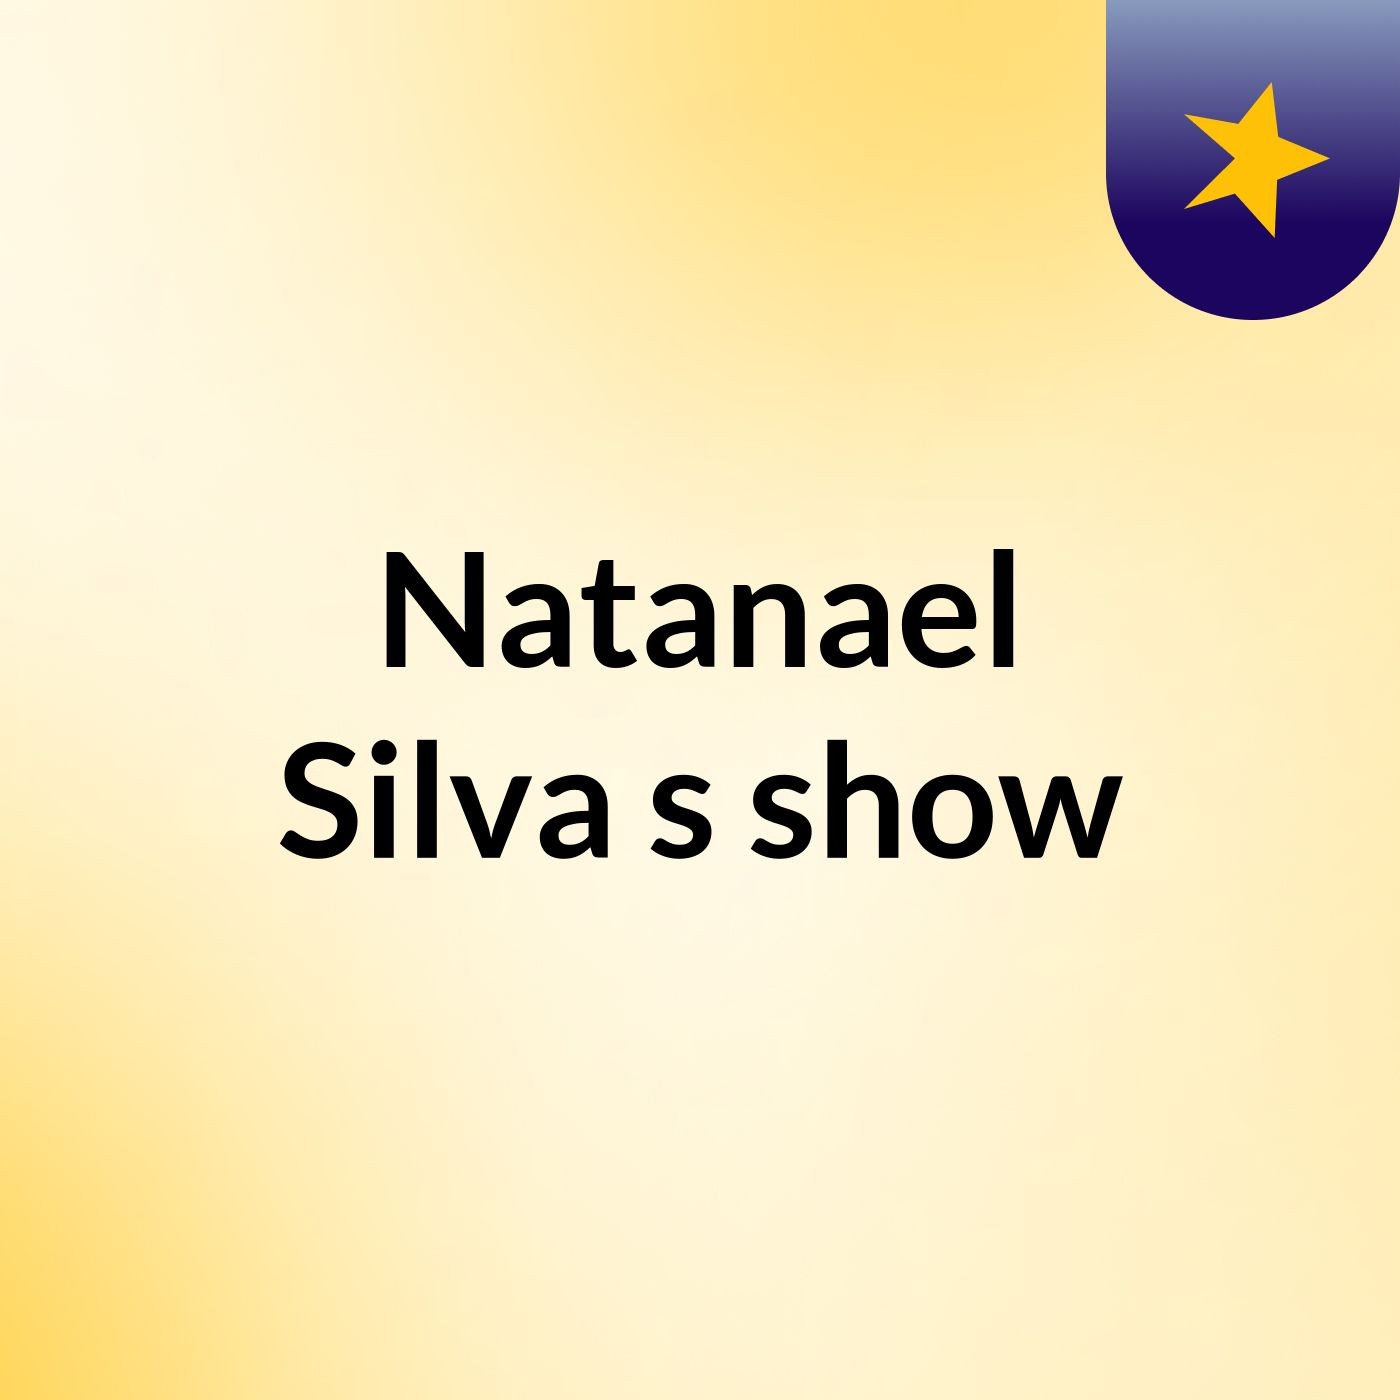 Natanael Silva's show